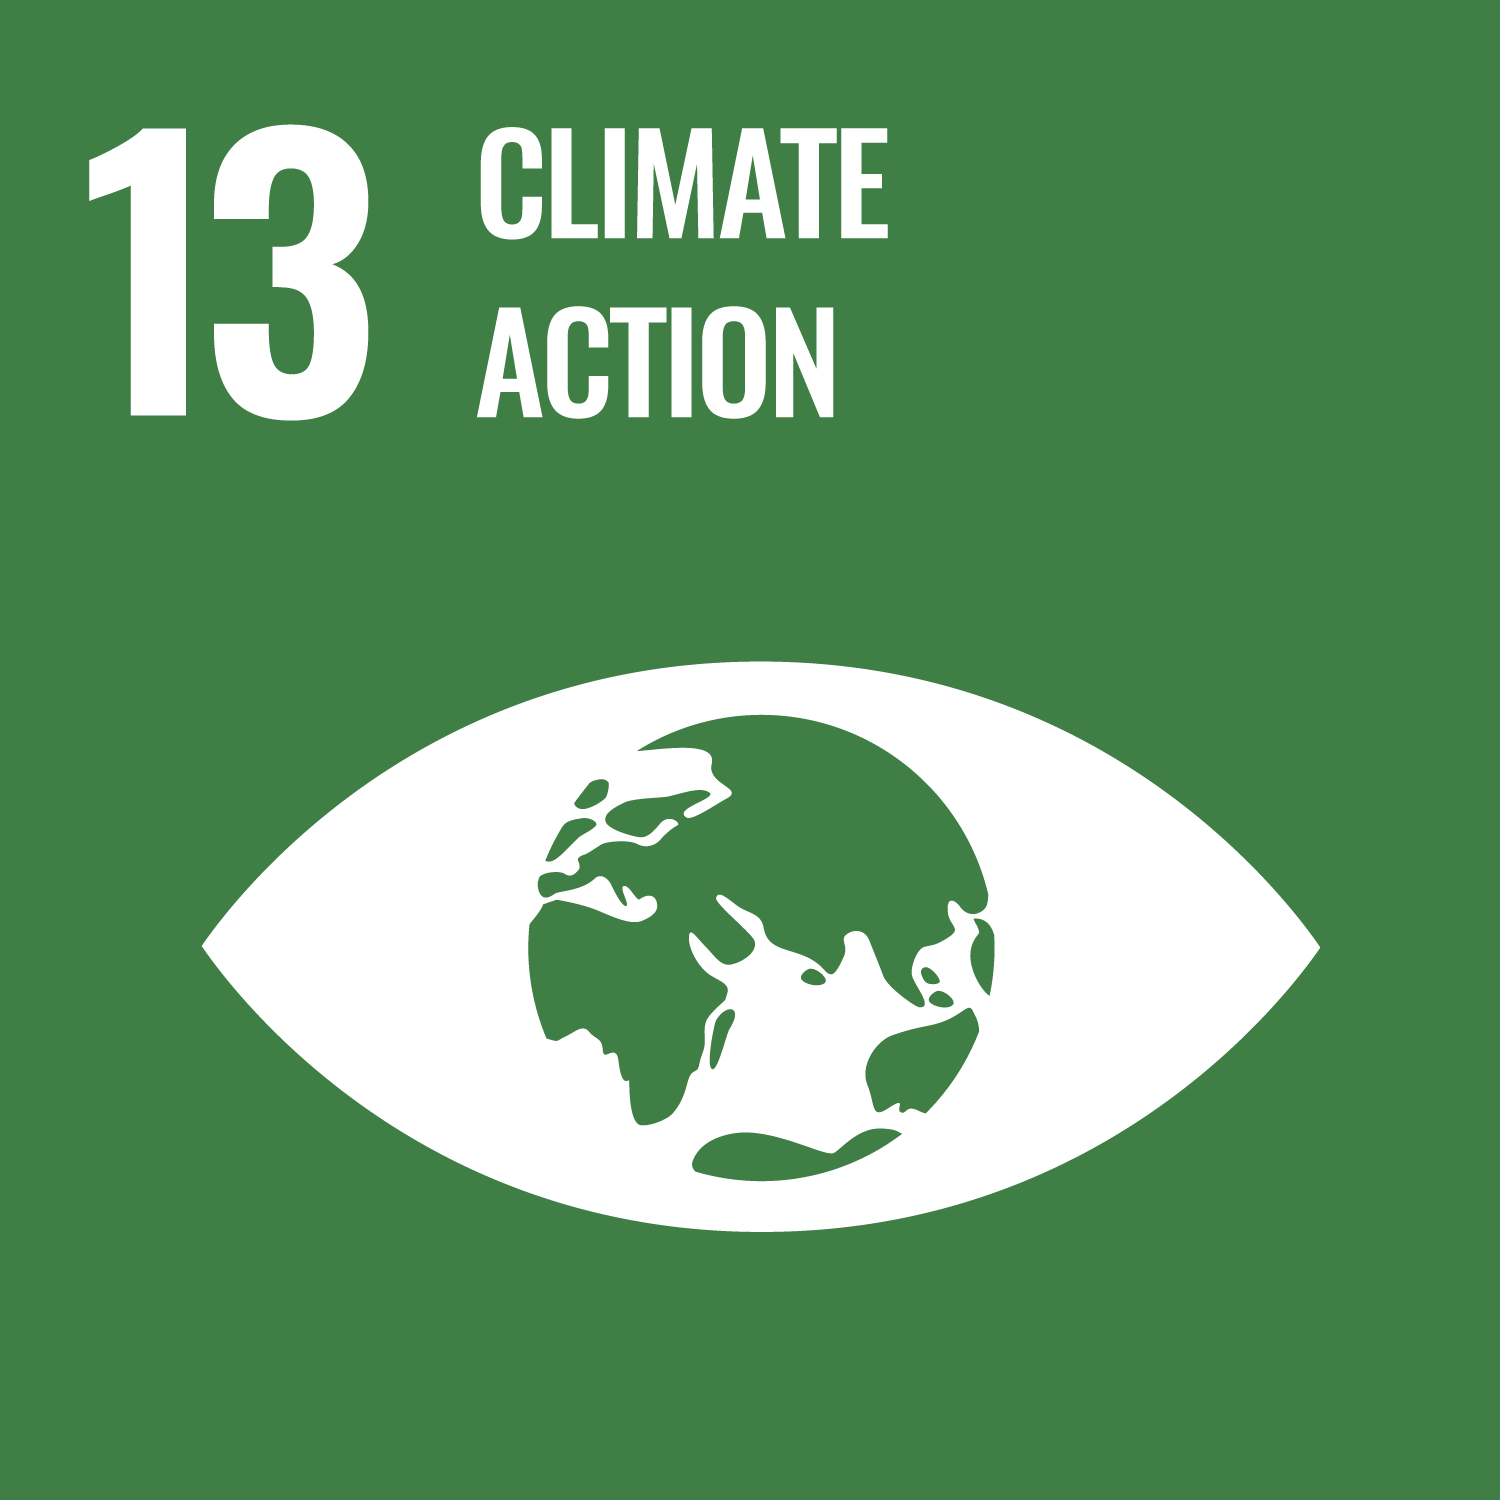 ROI-EFESO Sustainable Development Goal #13 (SDG)